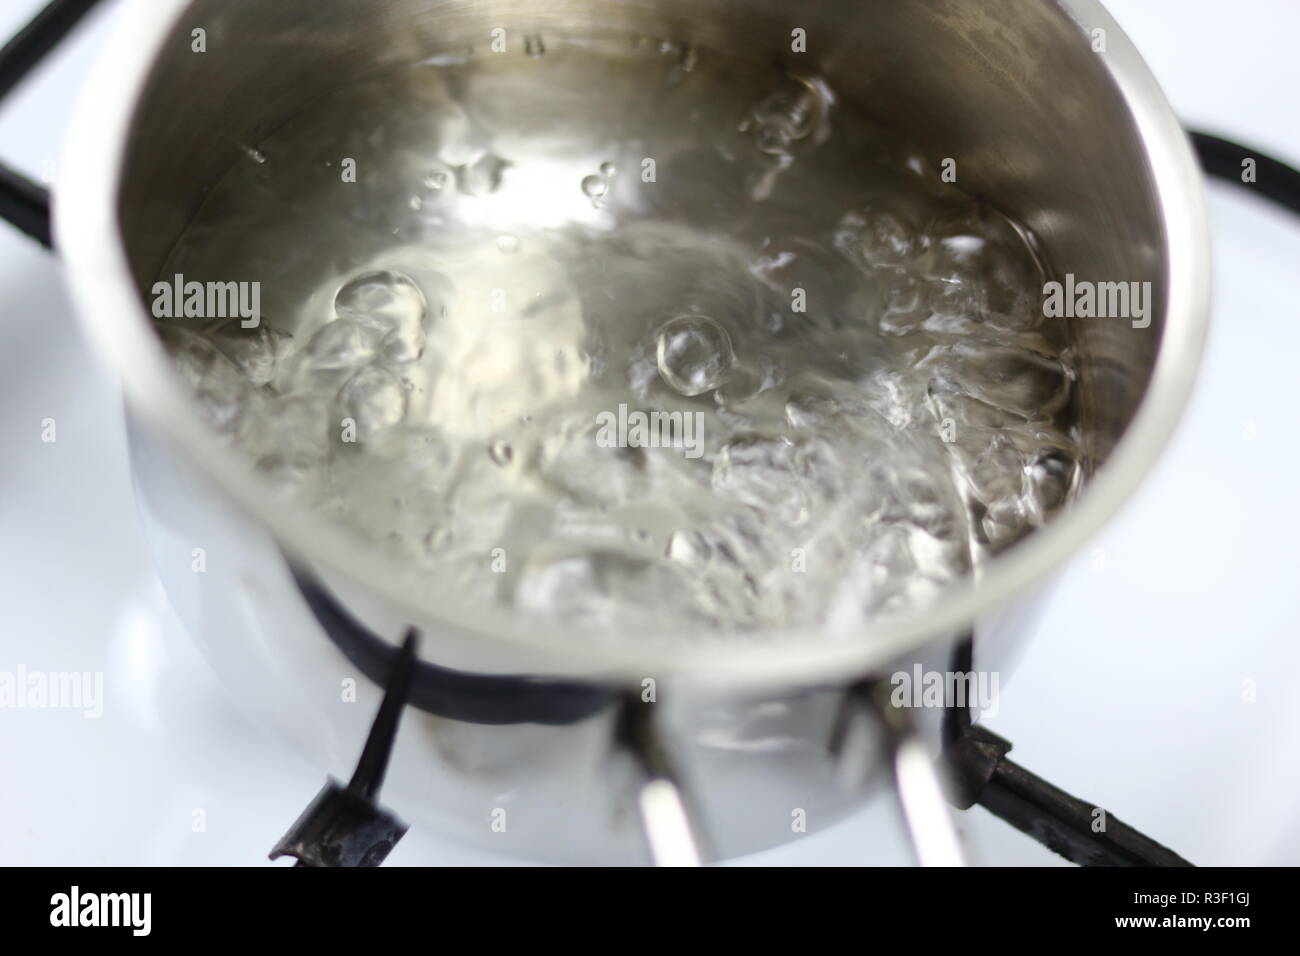 https://c8.alamy.com/comp/R3F1GJ/boiling-water-in-milk-pan-on-gas-stove-R3F1GJ.jpg